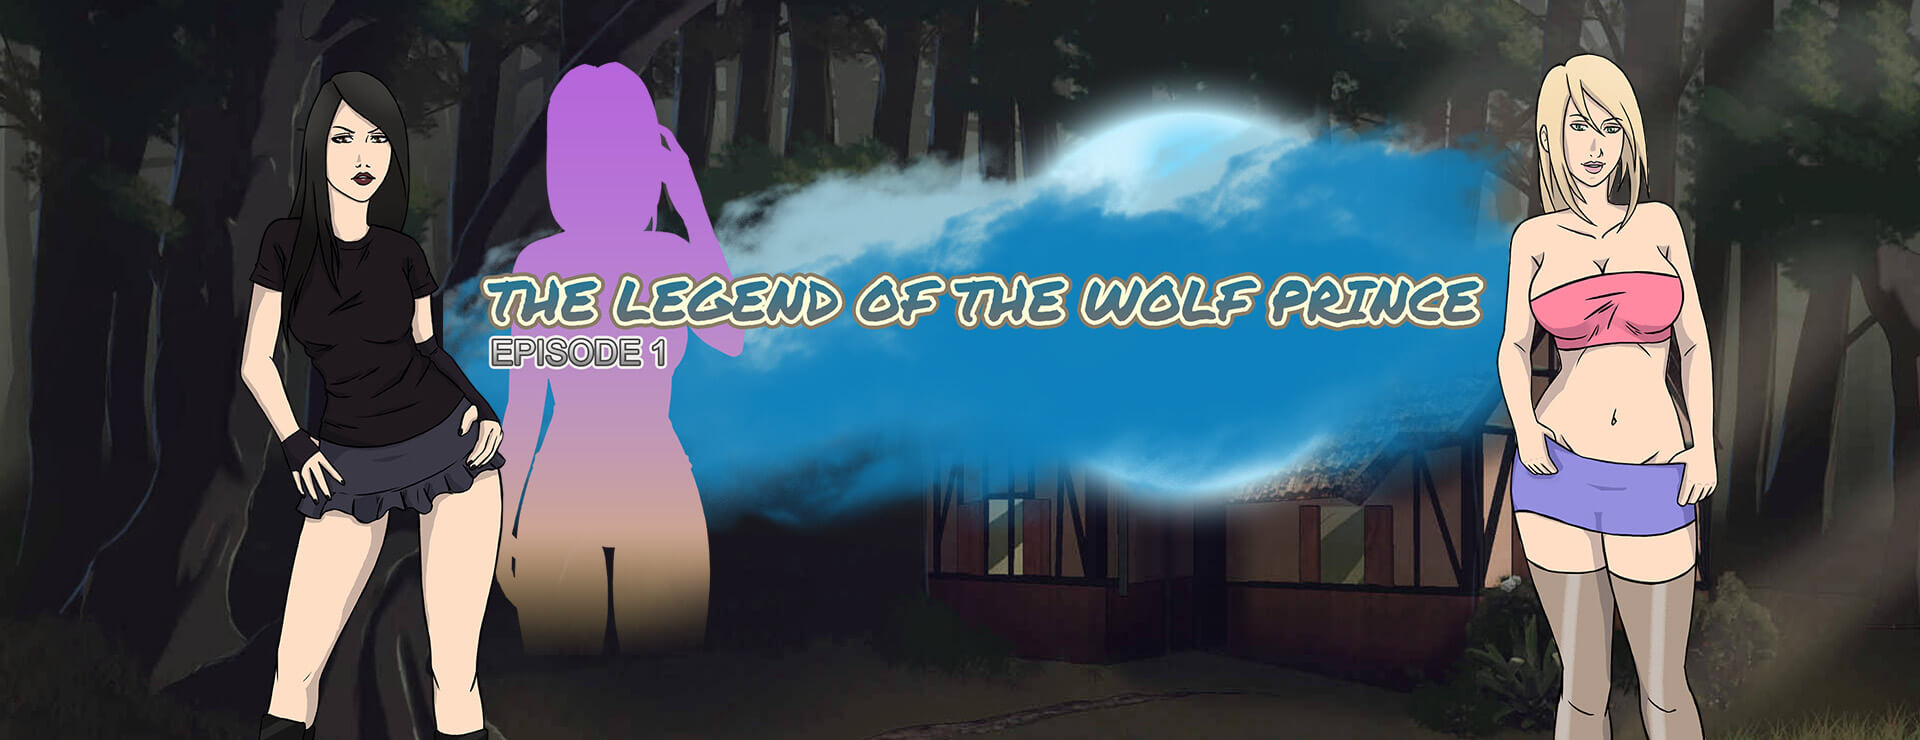 The Legend of the Wolf Prince - Episode 1 - Roman Visuel Jeu